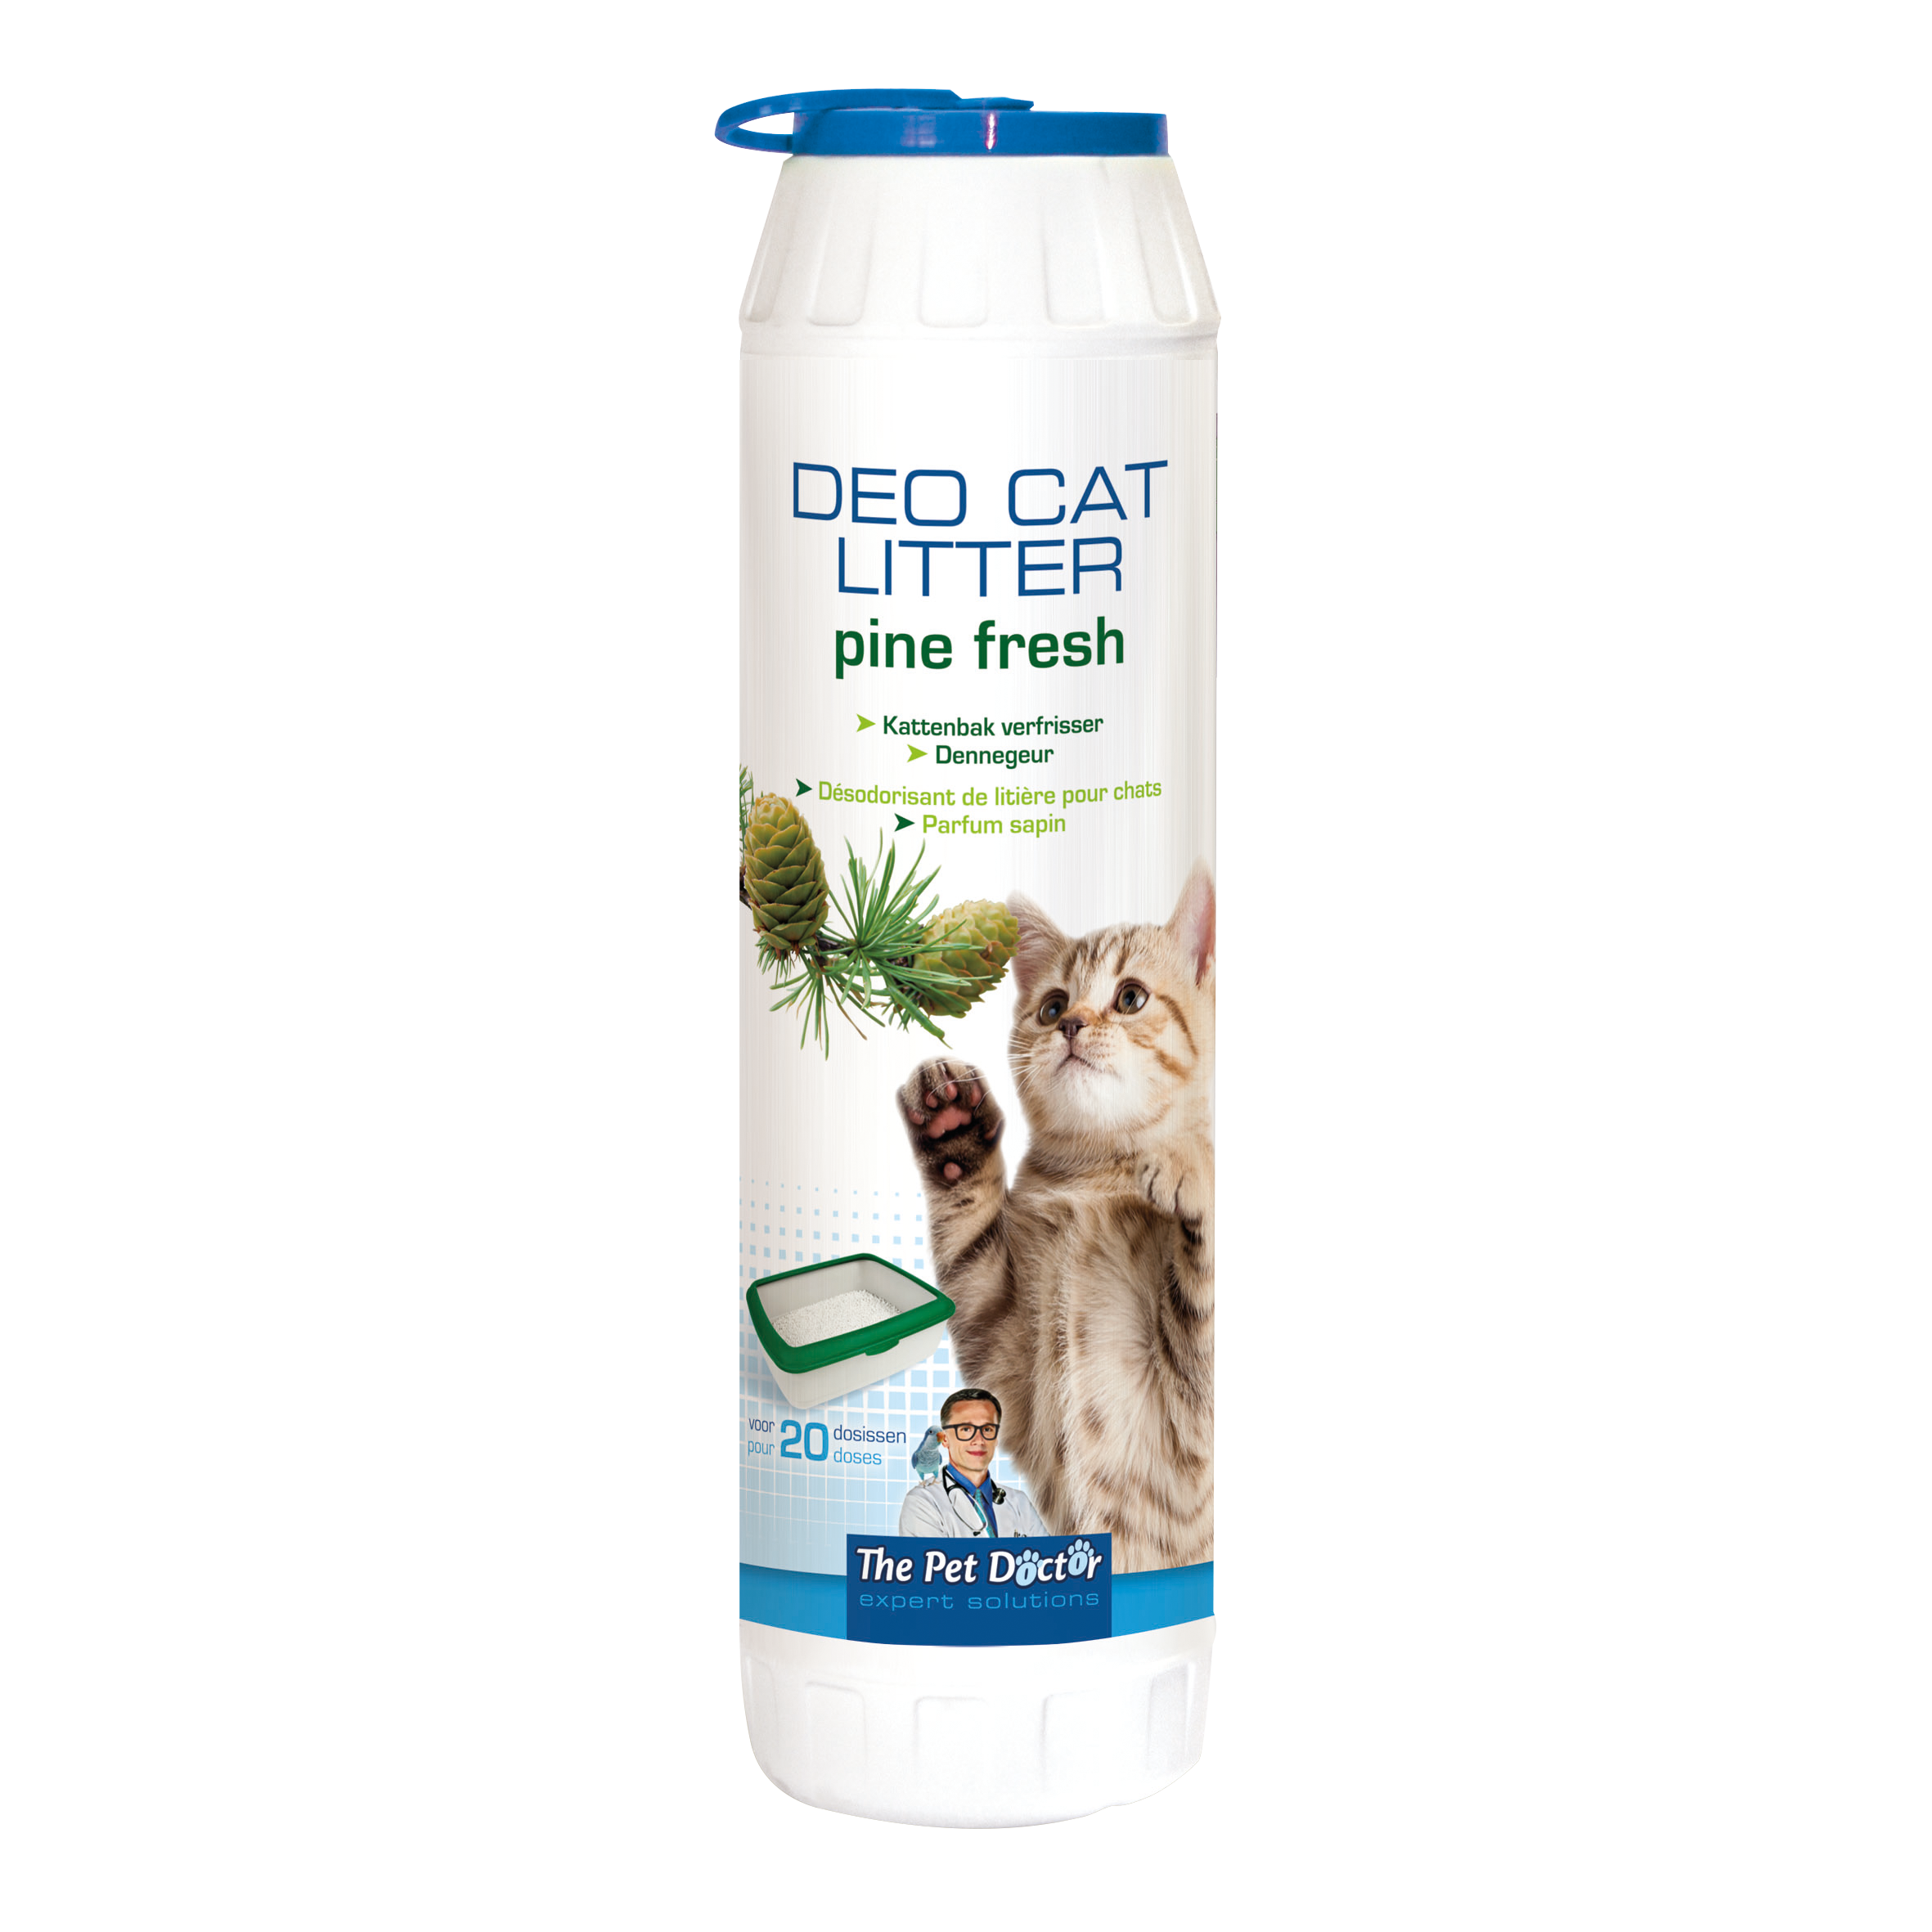 The Pet Doctor Deo Cat Litter Pine Fresh 750 g image